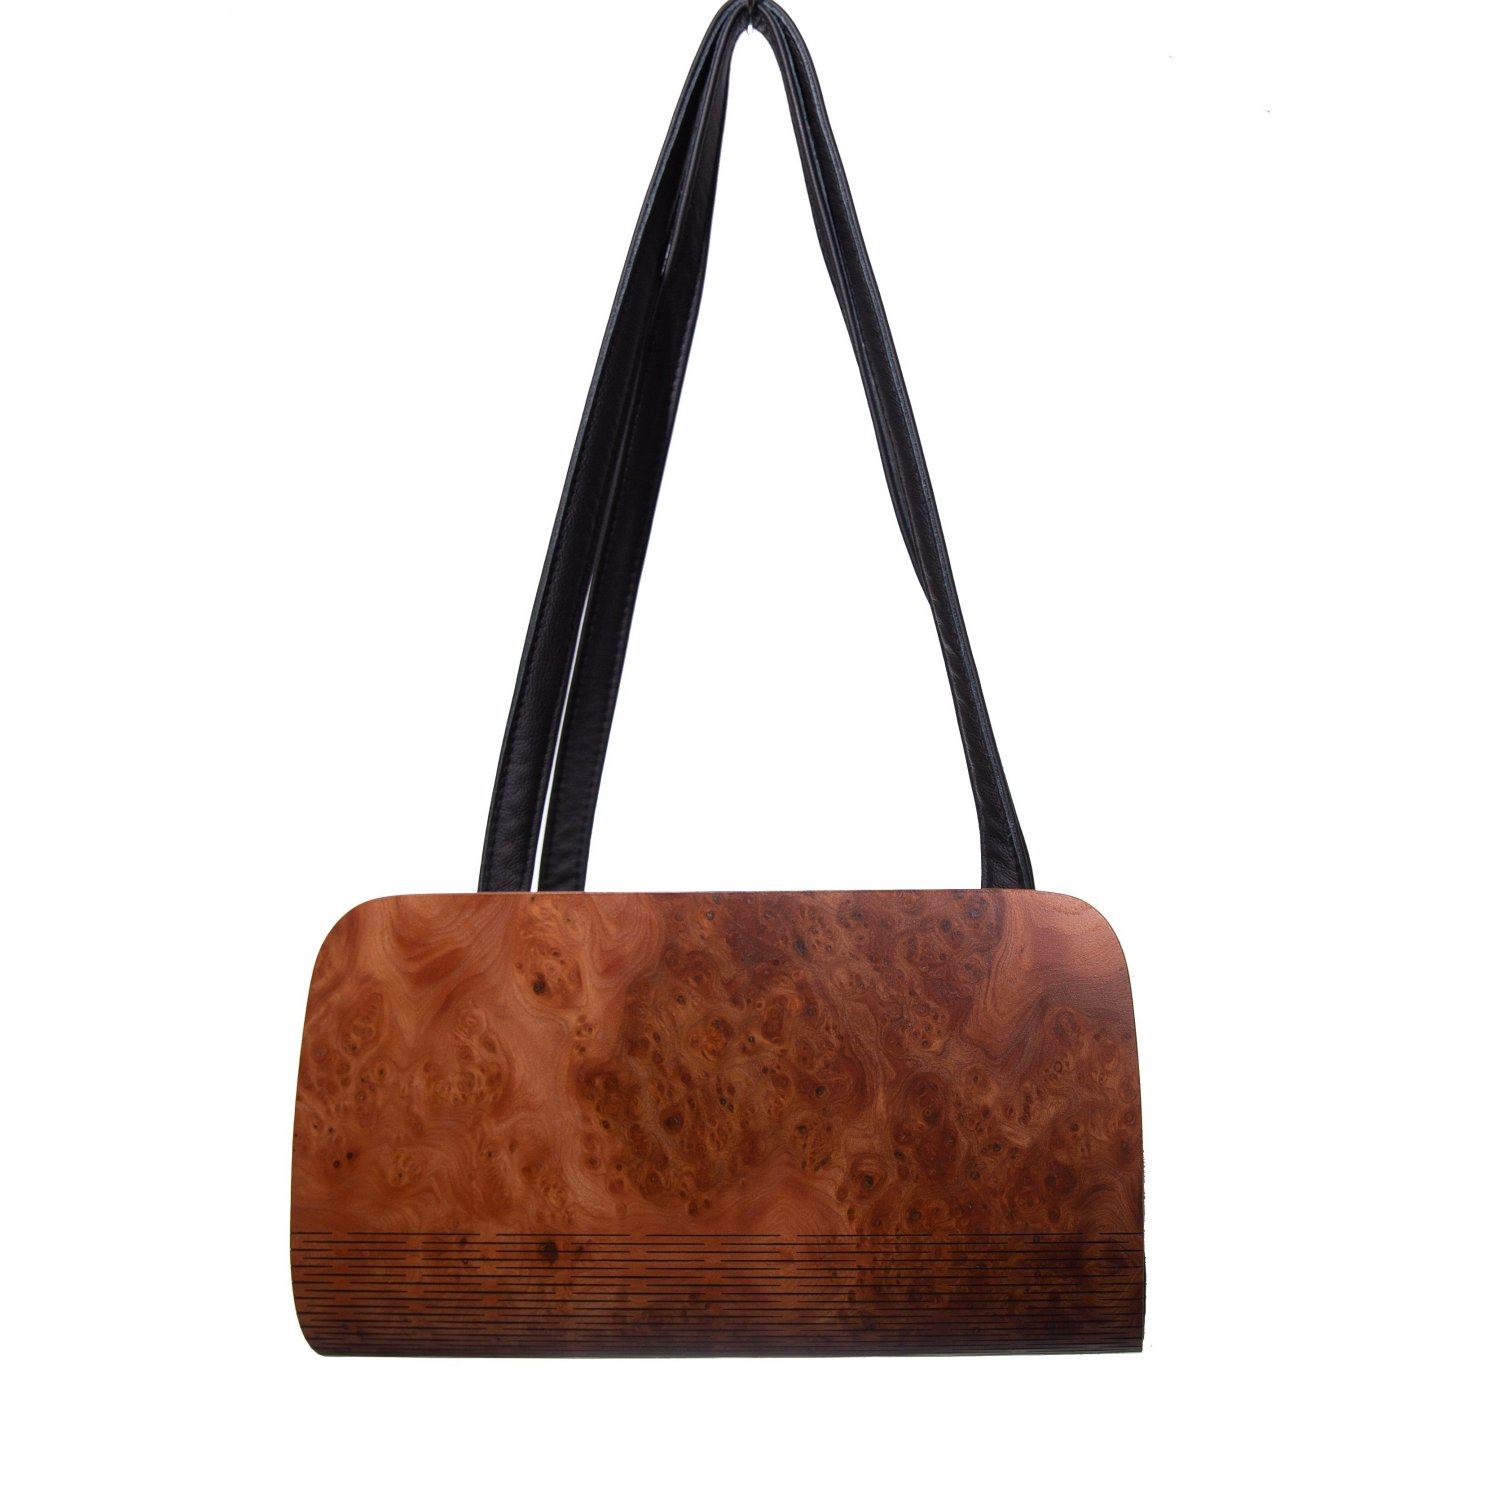 Holz-Fichtner Handtasche